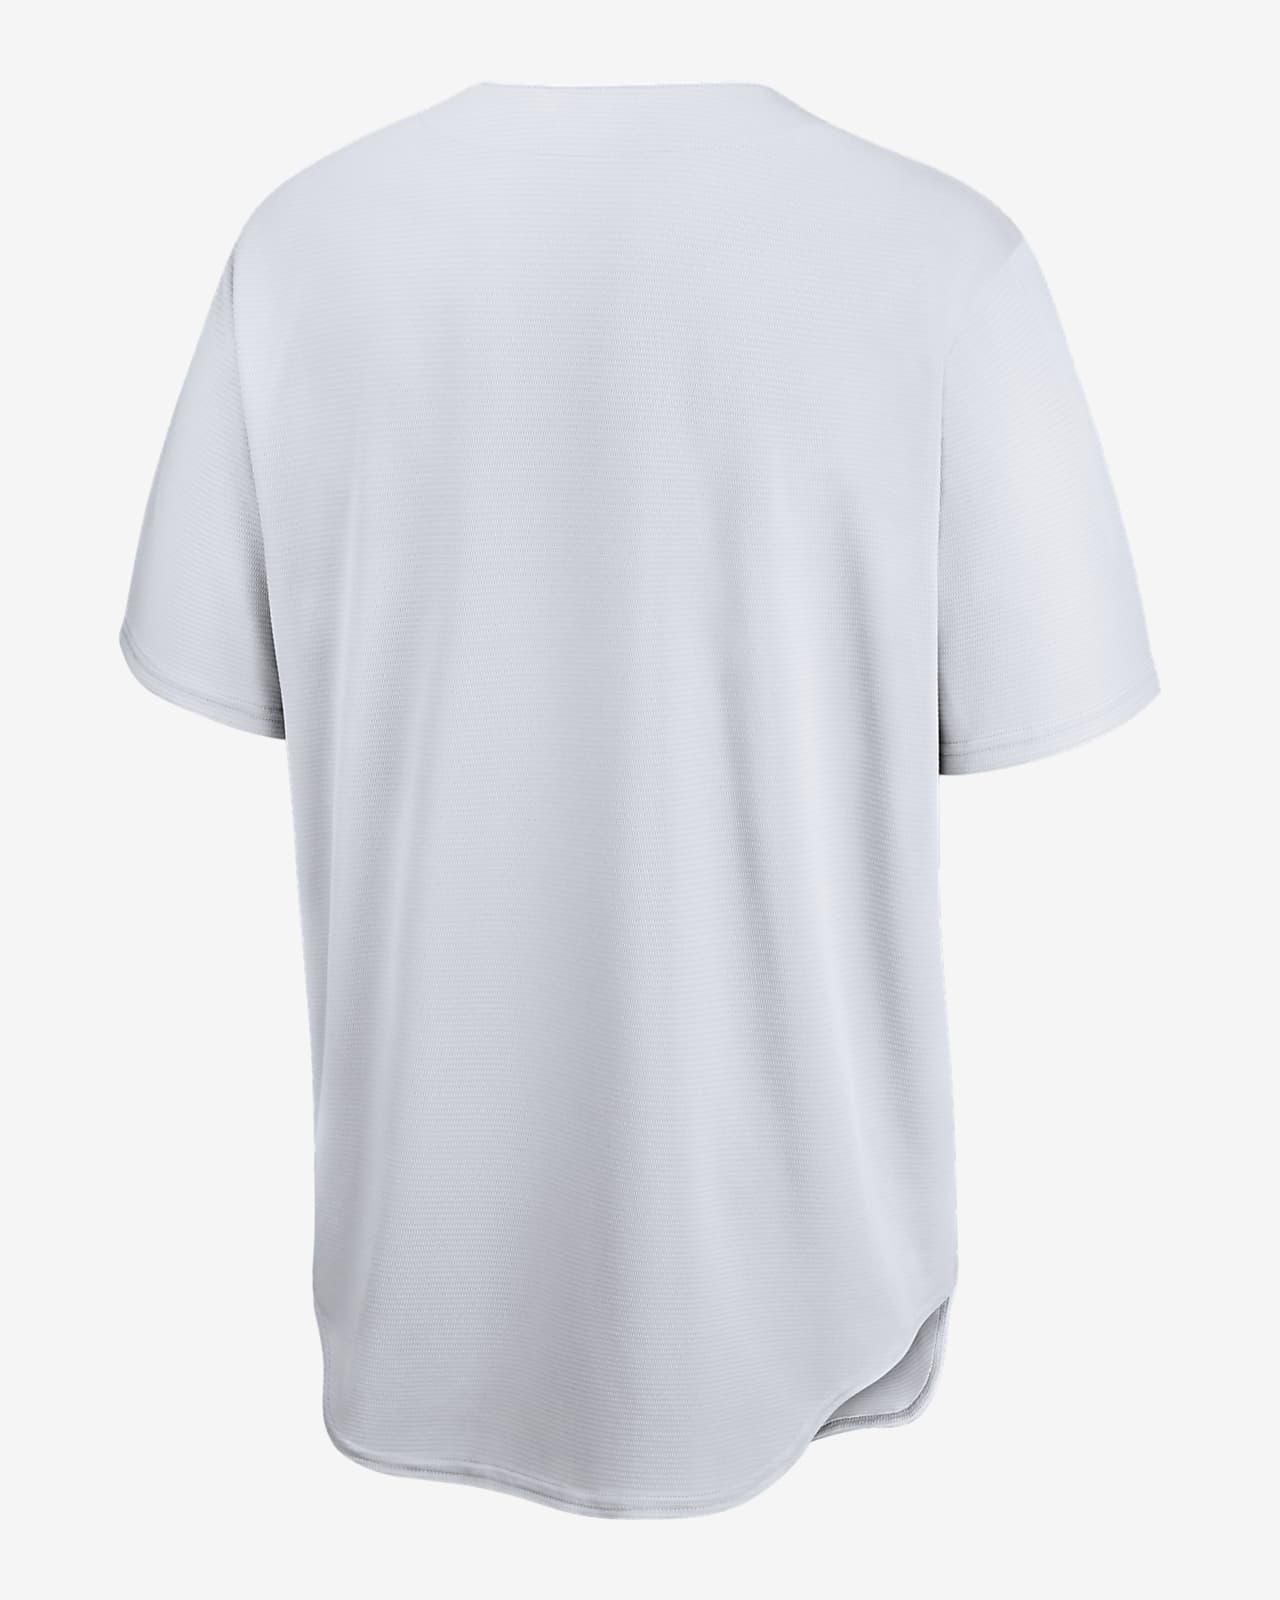 Nike Dri-FIT Cooperstown Logo (MLB Texas Rangers) Men's T-Shirt